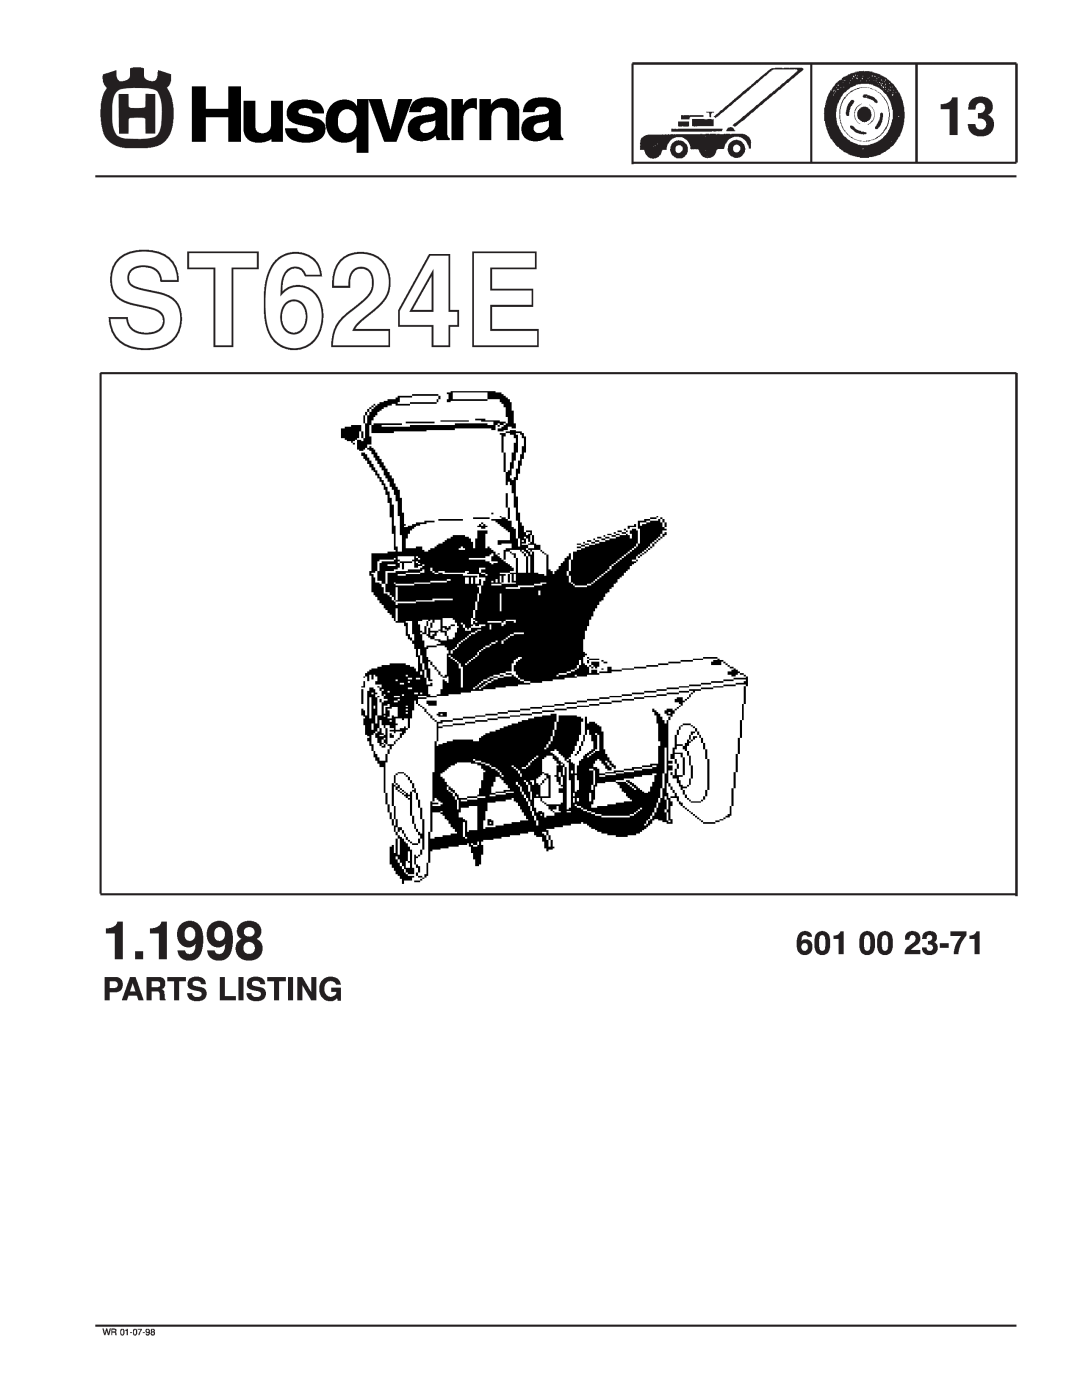 Husqvarna ST624E manual 1.1998, 601 00, Parts Listing 